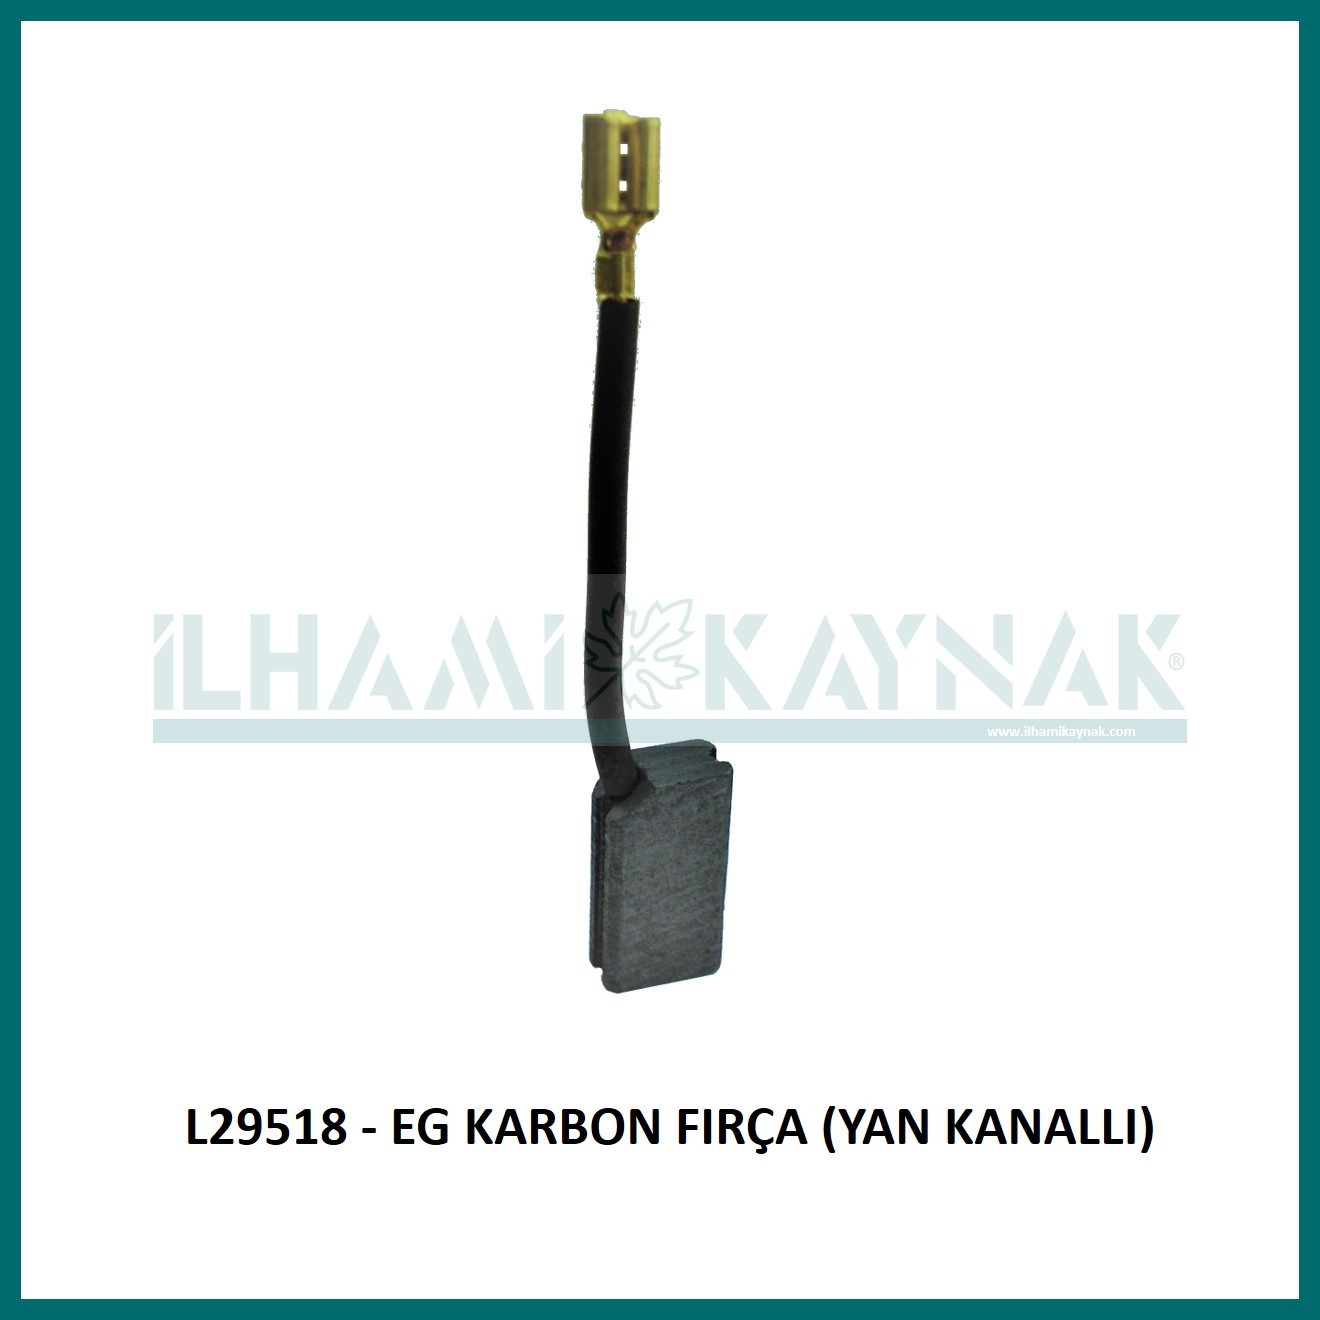 L29518 - EG KARBON FIRÇA (YAN KANALLI) 6*10*18.5 mm - 100 Adet